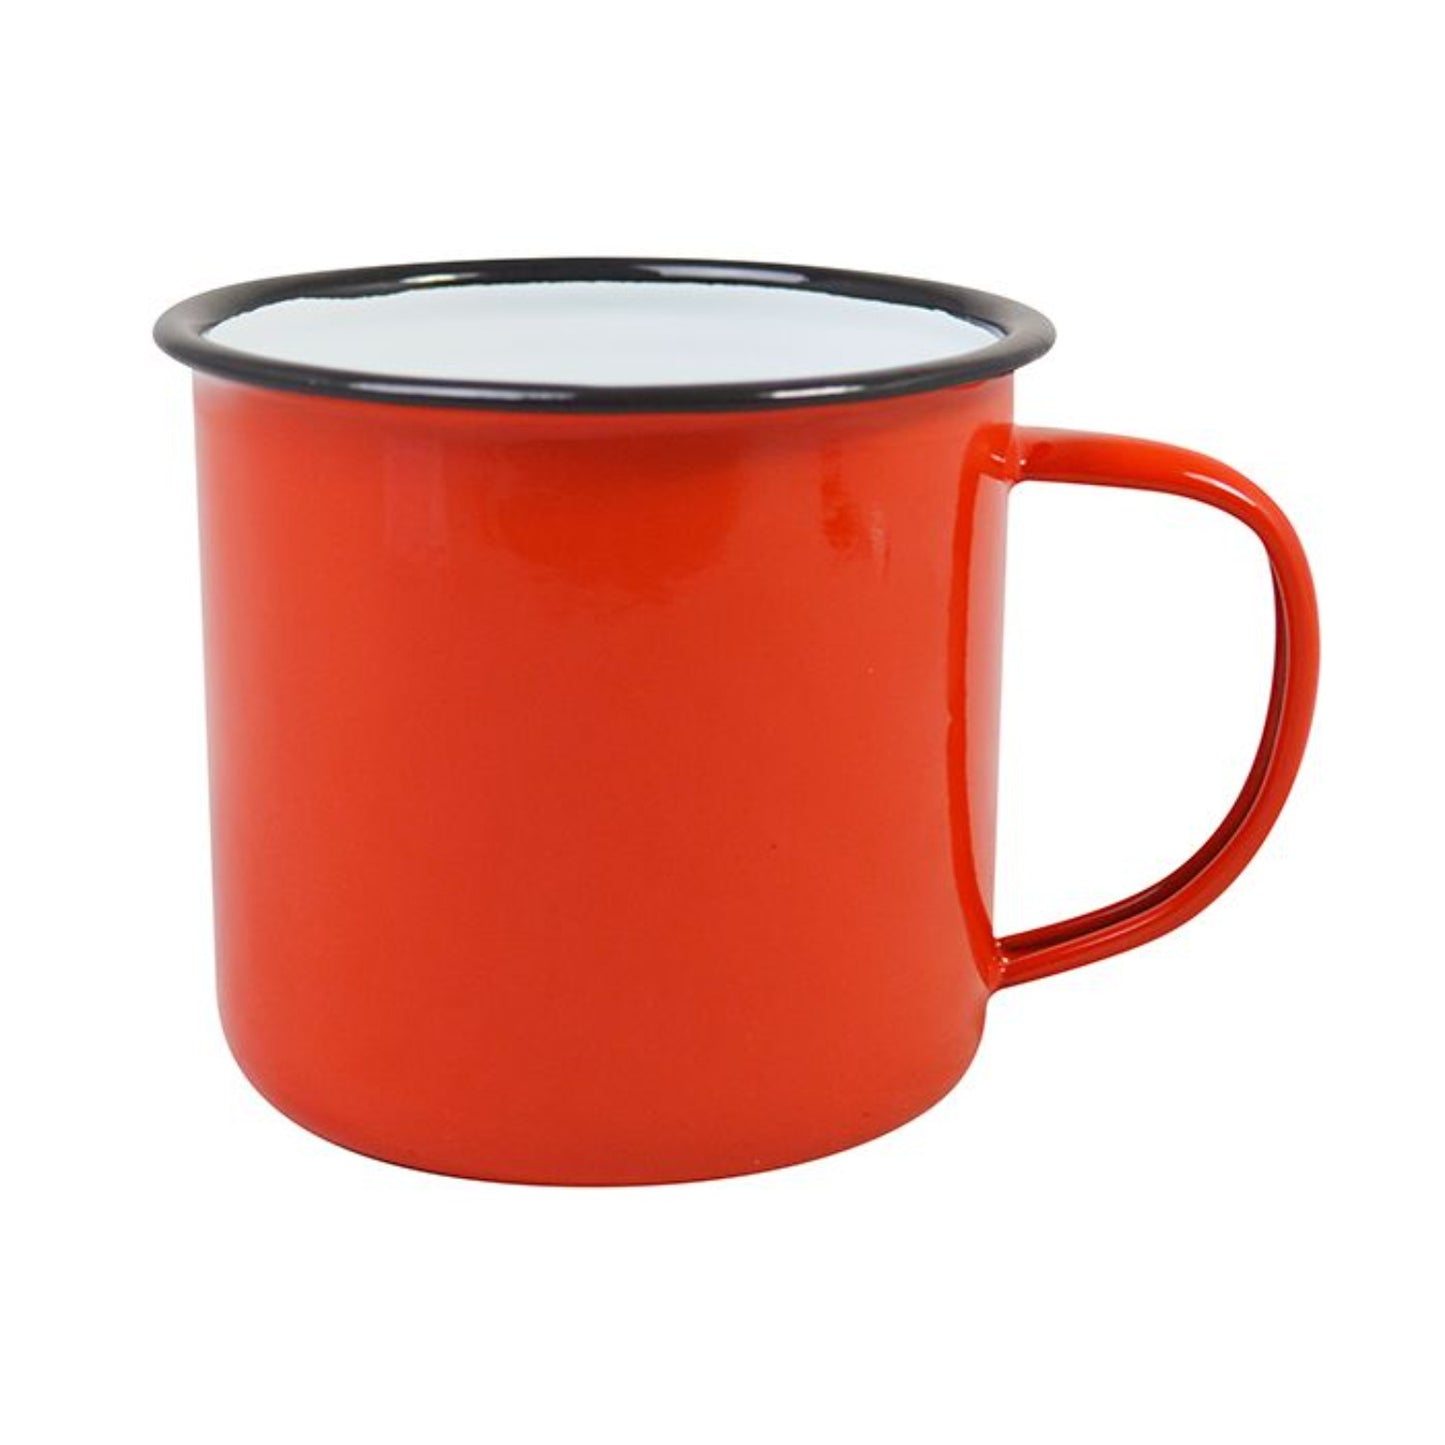 Enamel Mug Red with Black Trim 18oz